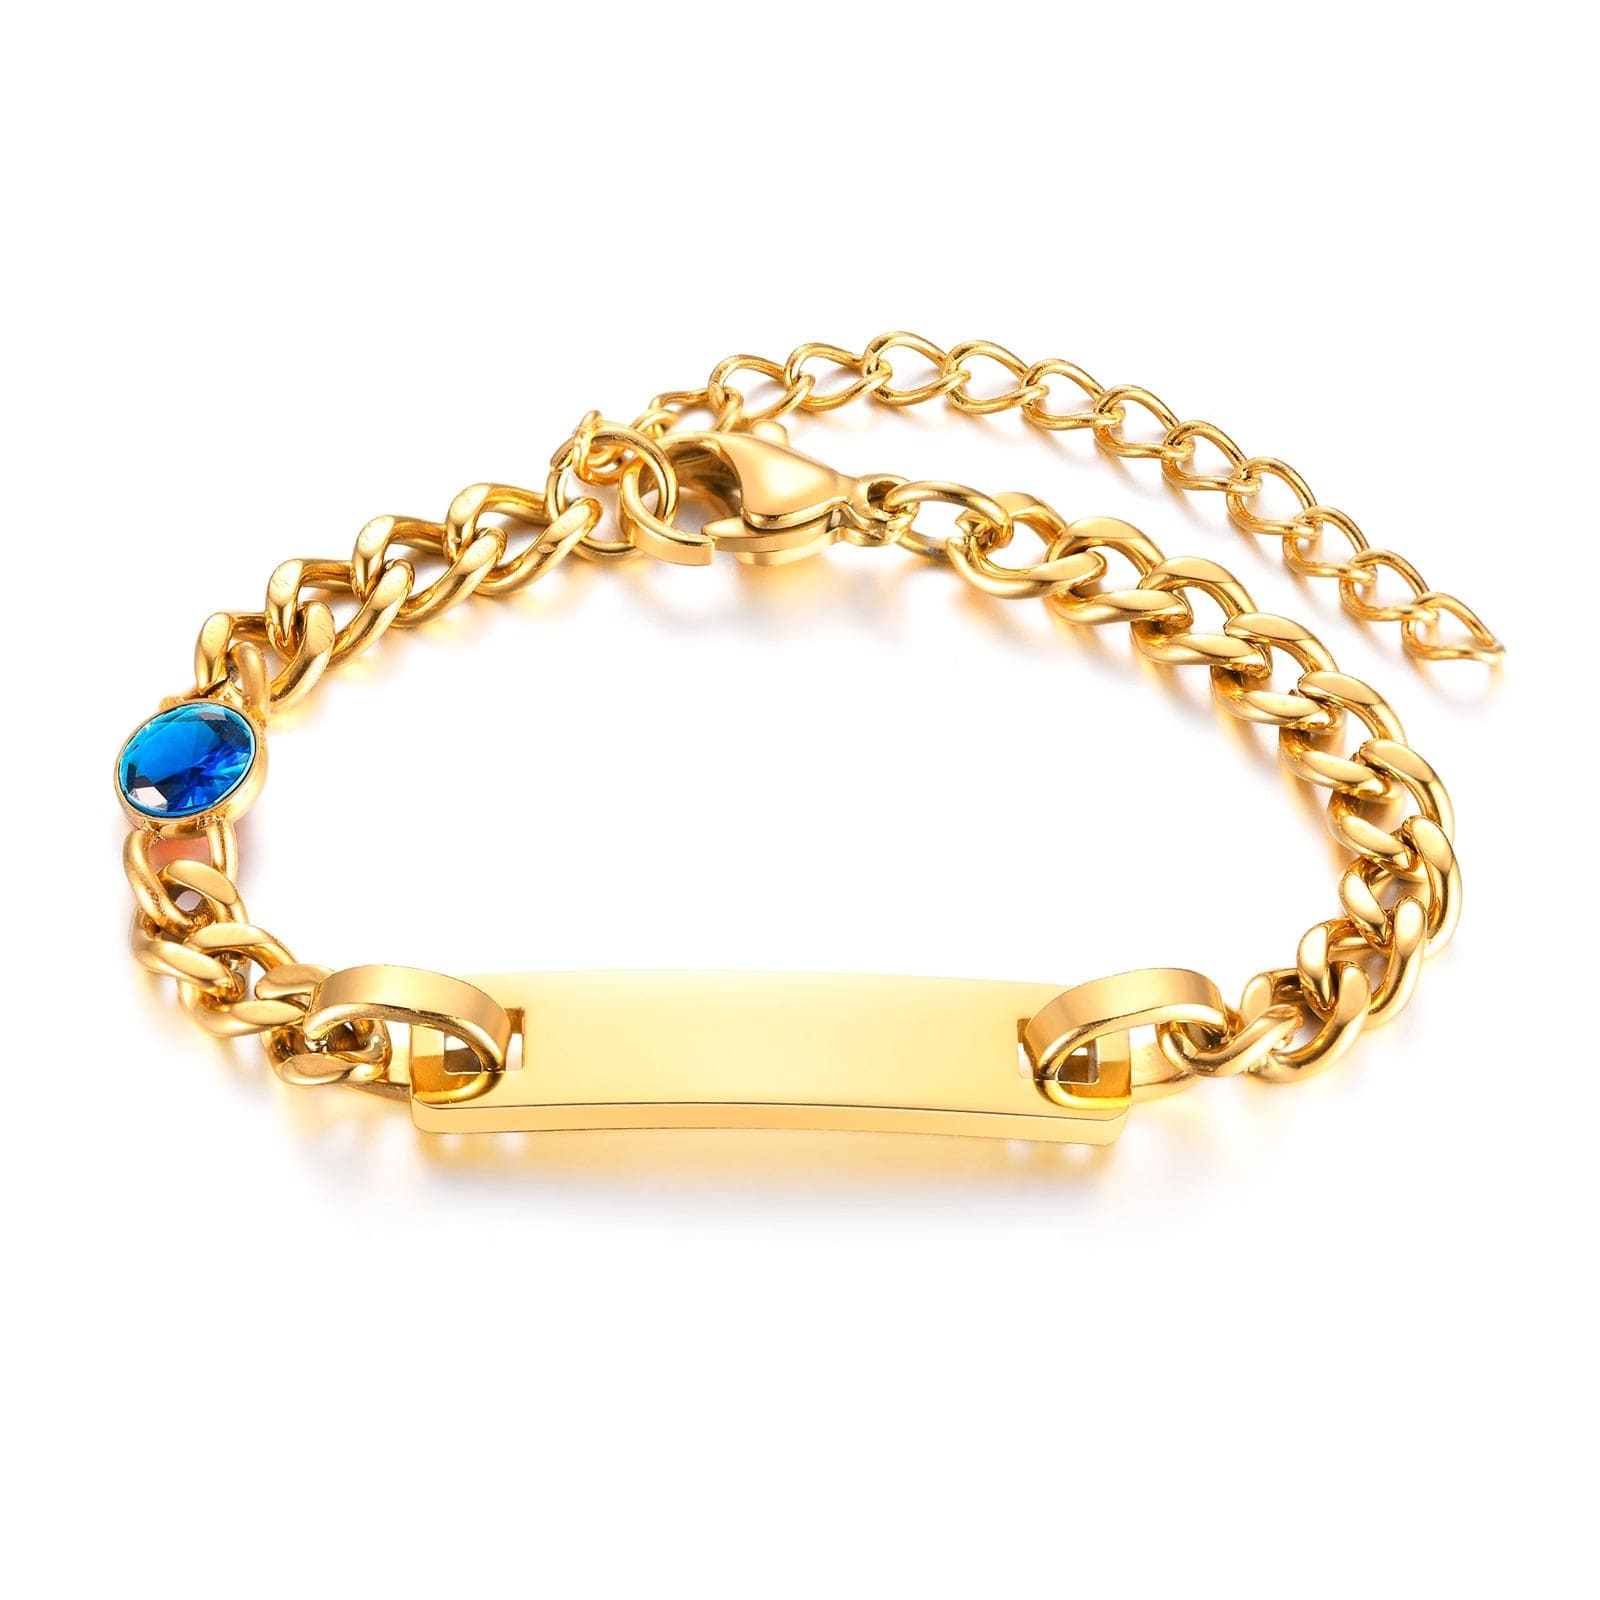 VVS Jewelry hip hop jewelry style 9 Custom Baby Engraved Name Bracelet with Birthstone